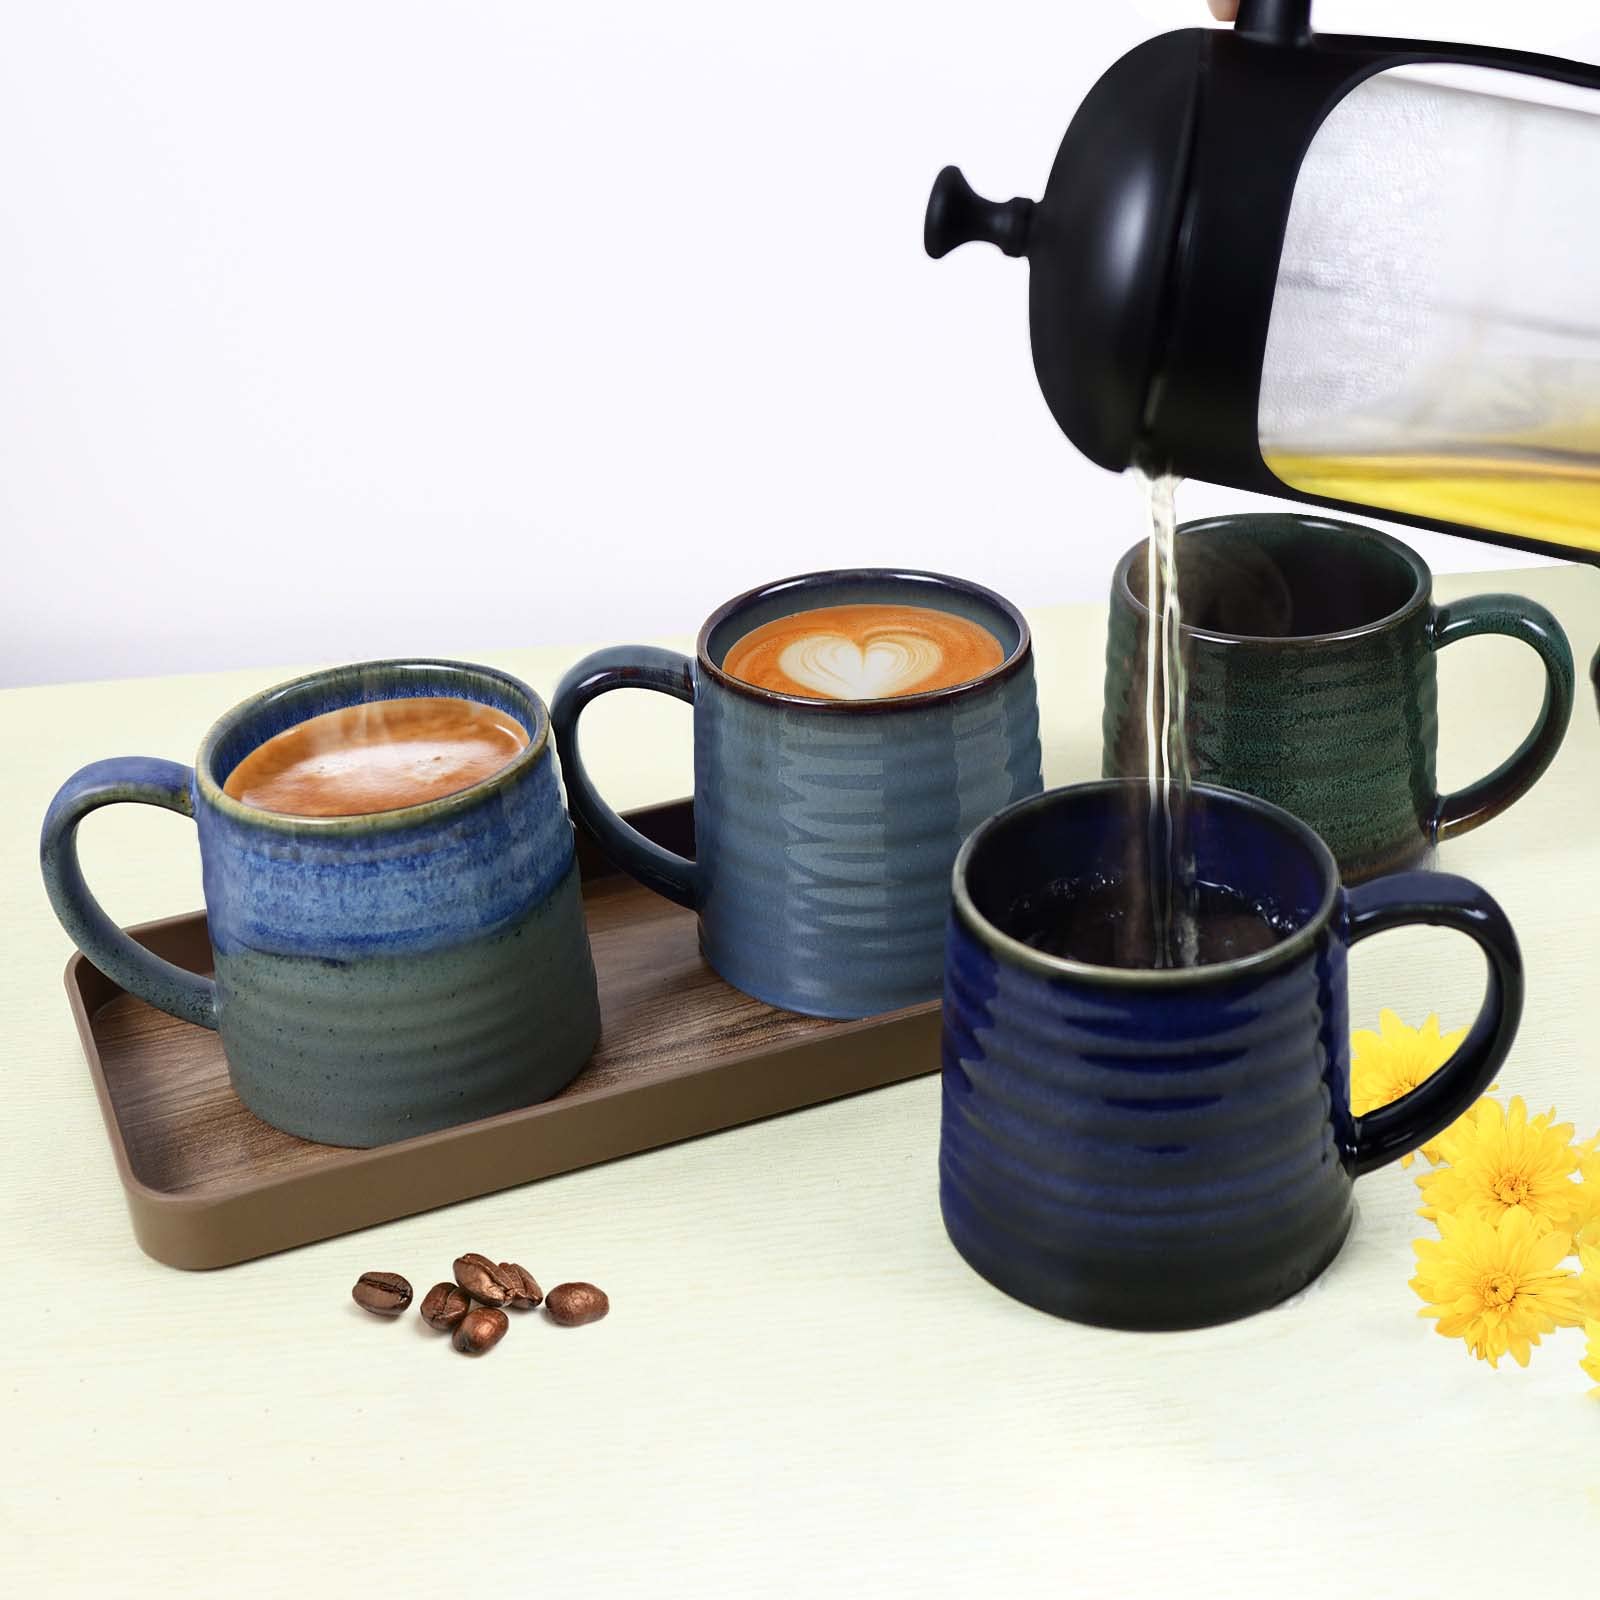 Otevymu 18 Oz Large Ceramic Coffee Mug, Big Handmade Pottery Tea Cup for Office and Home, Big Handle Easy to Hold, Microwave and Dishwasher Safe, Stylish Texture Glaze (Fog Blue)